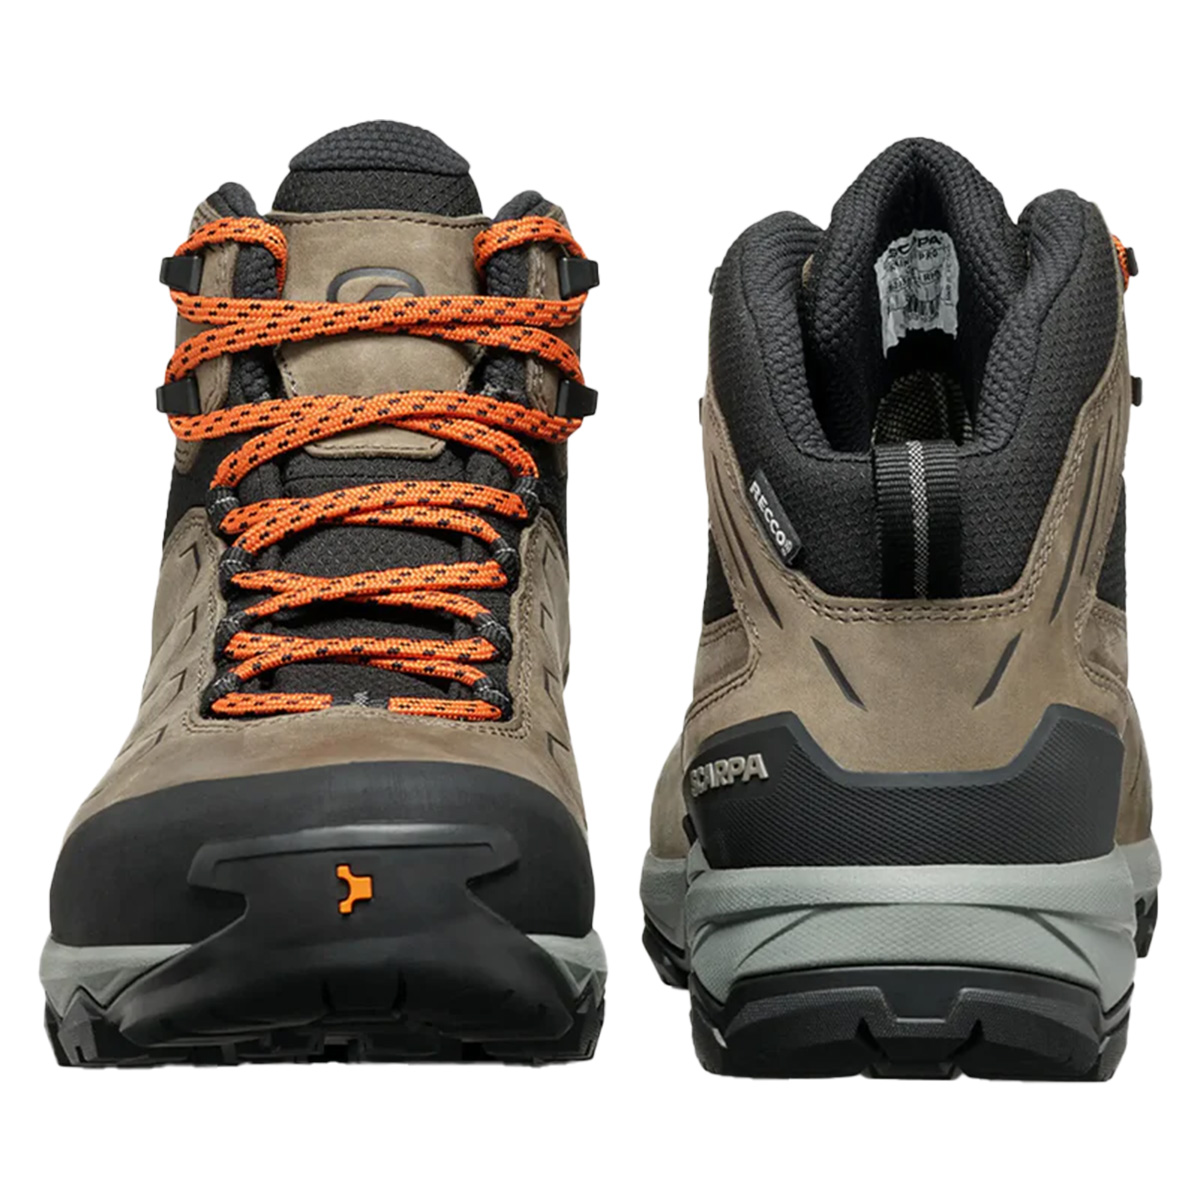 Scarpa Moraine Mid Pro GTX Men's Hiking Boots 